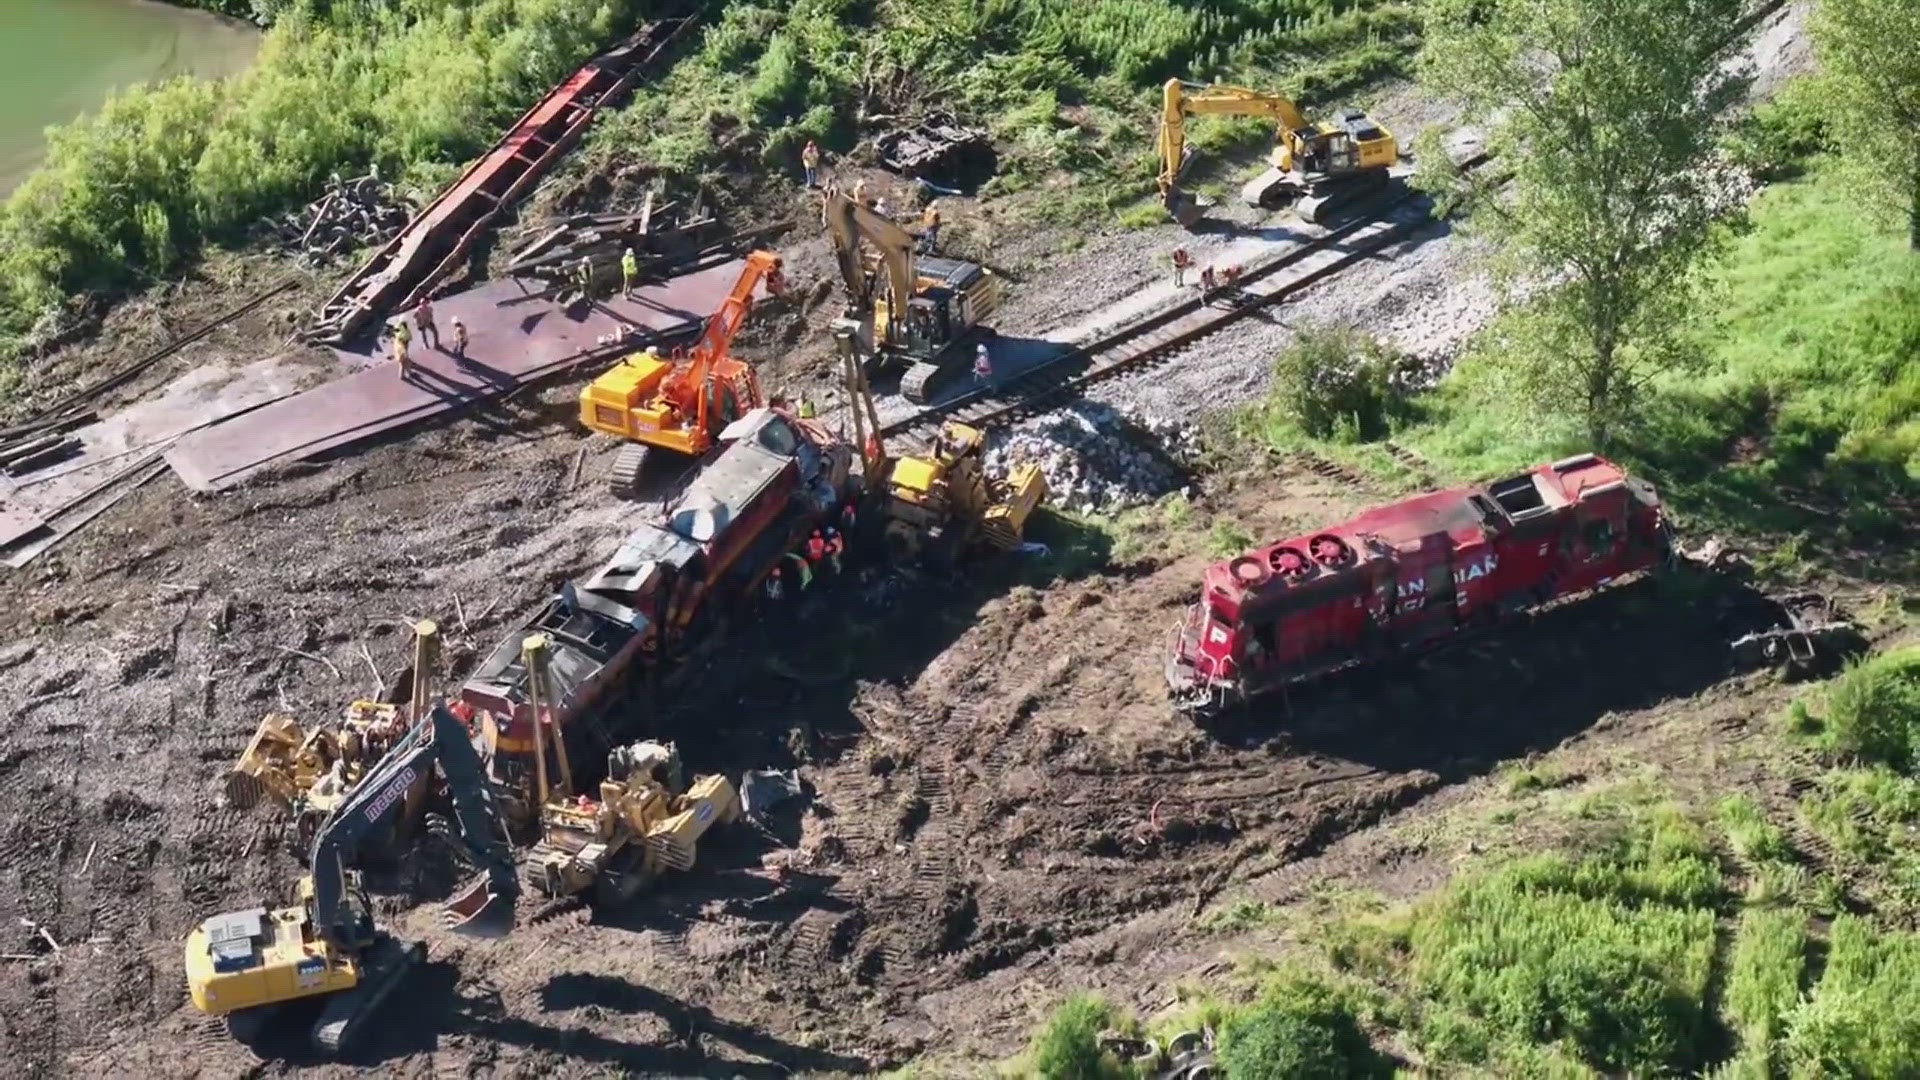 Video by Raul Arocho shows the aftermath of a Saturday night train derailment near Midway Beach, Iowa.